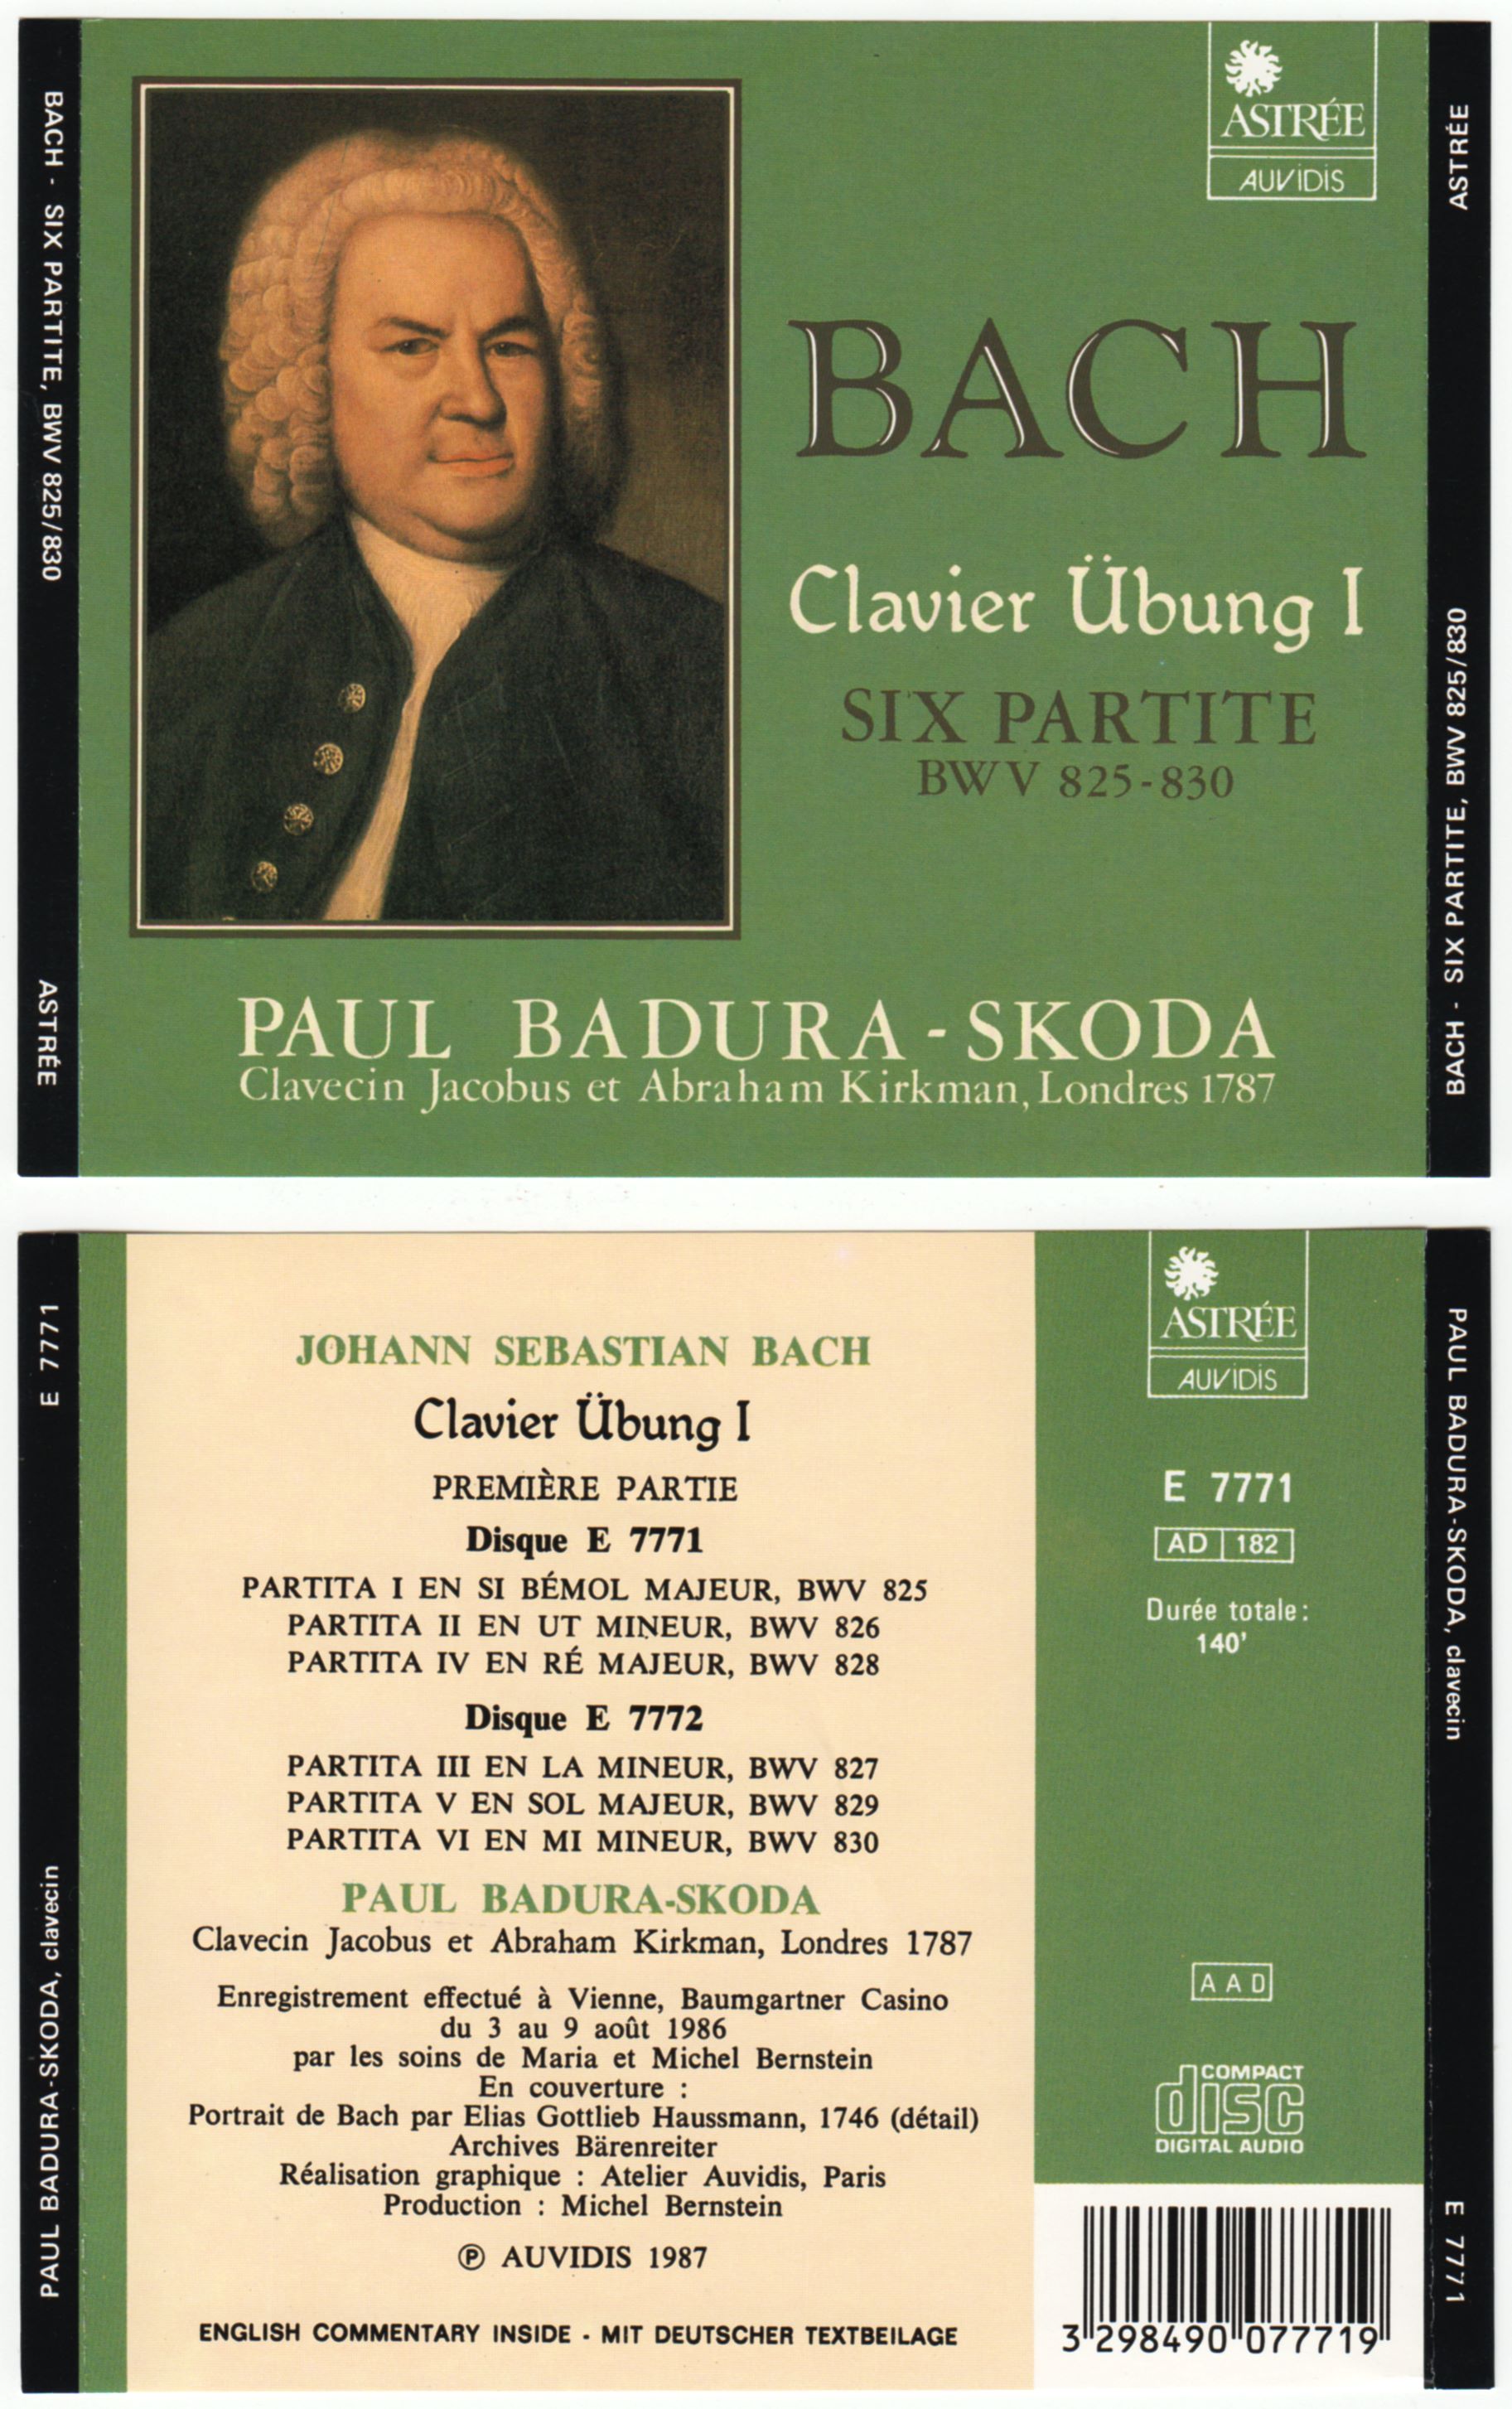 Bach - Partitas - Paul Badura-Skoda, harpsichord CD02